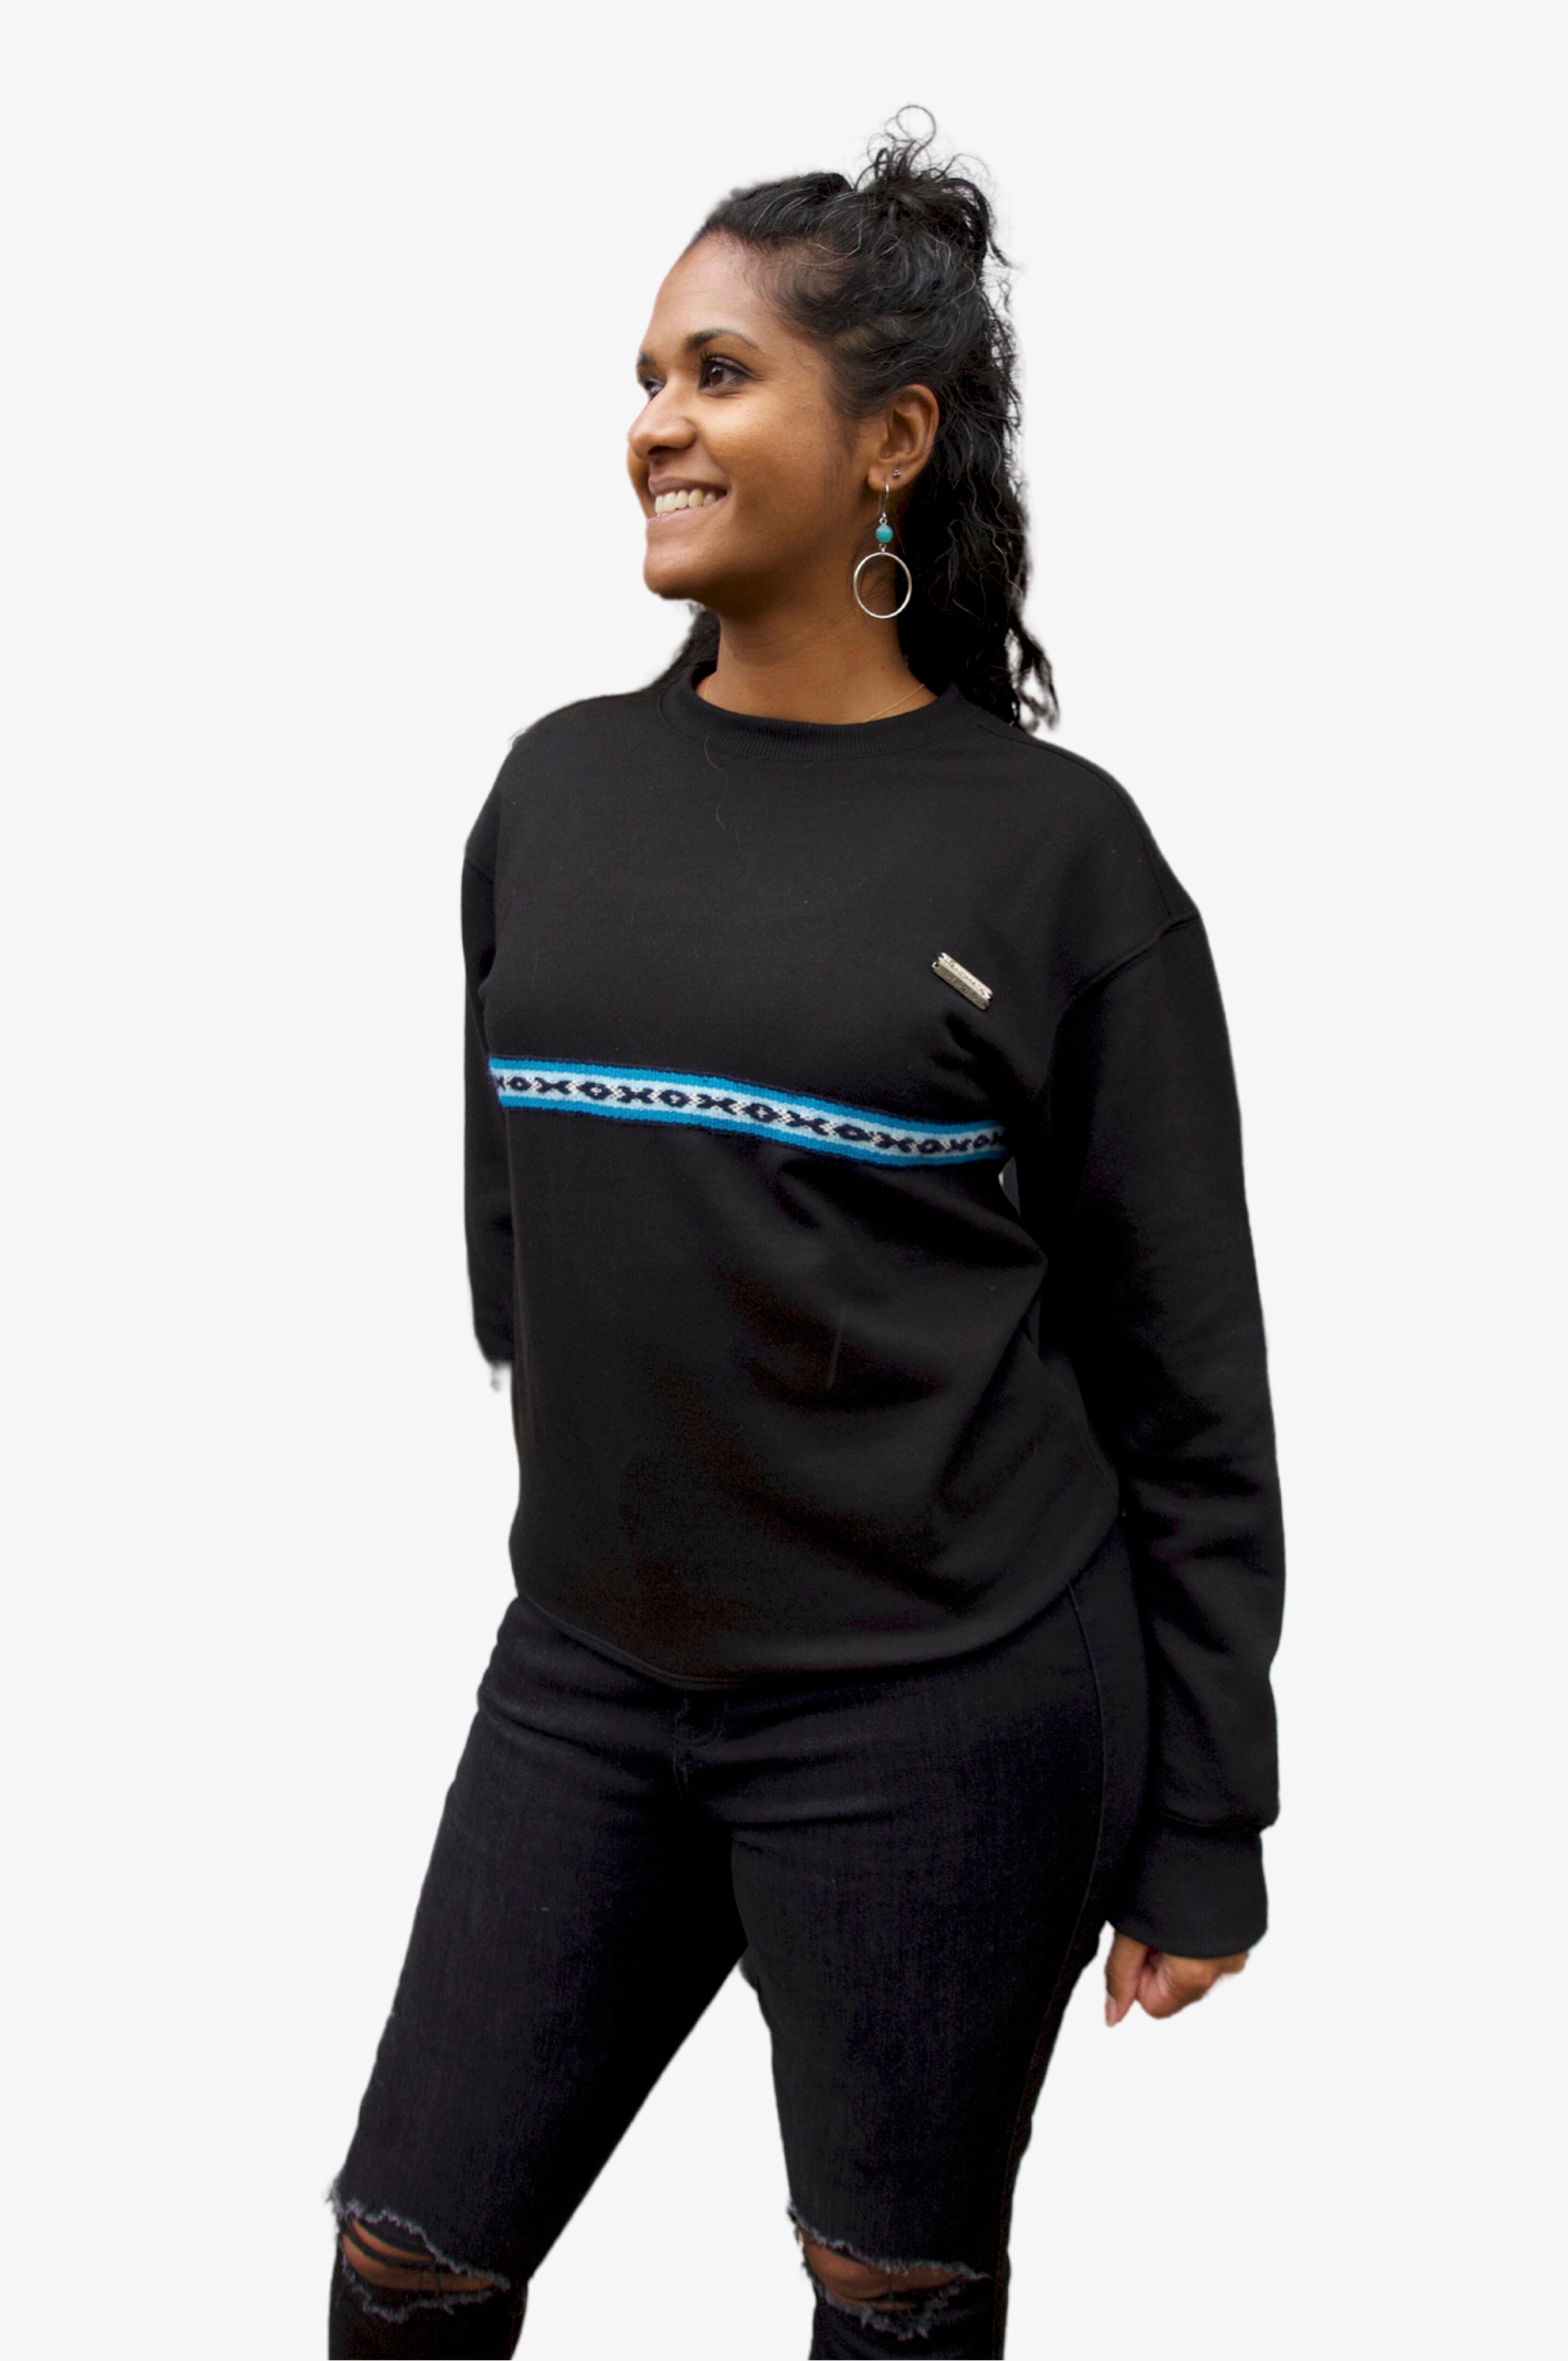 Black unisex sweatshirt